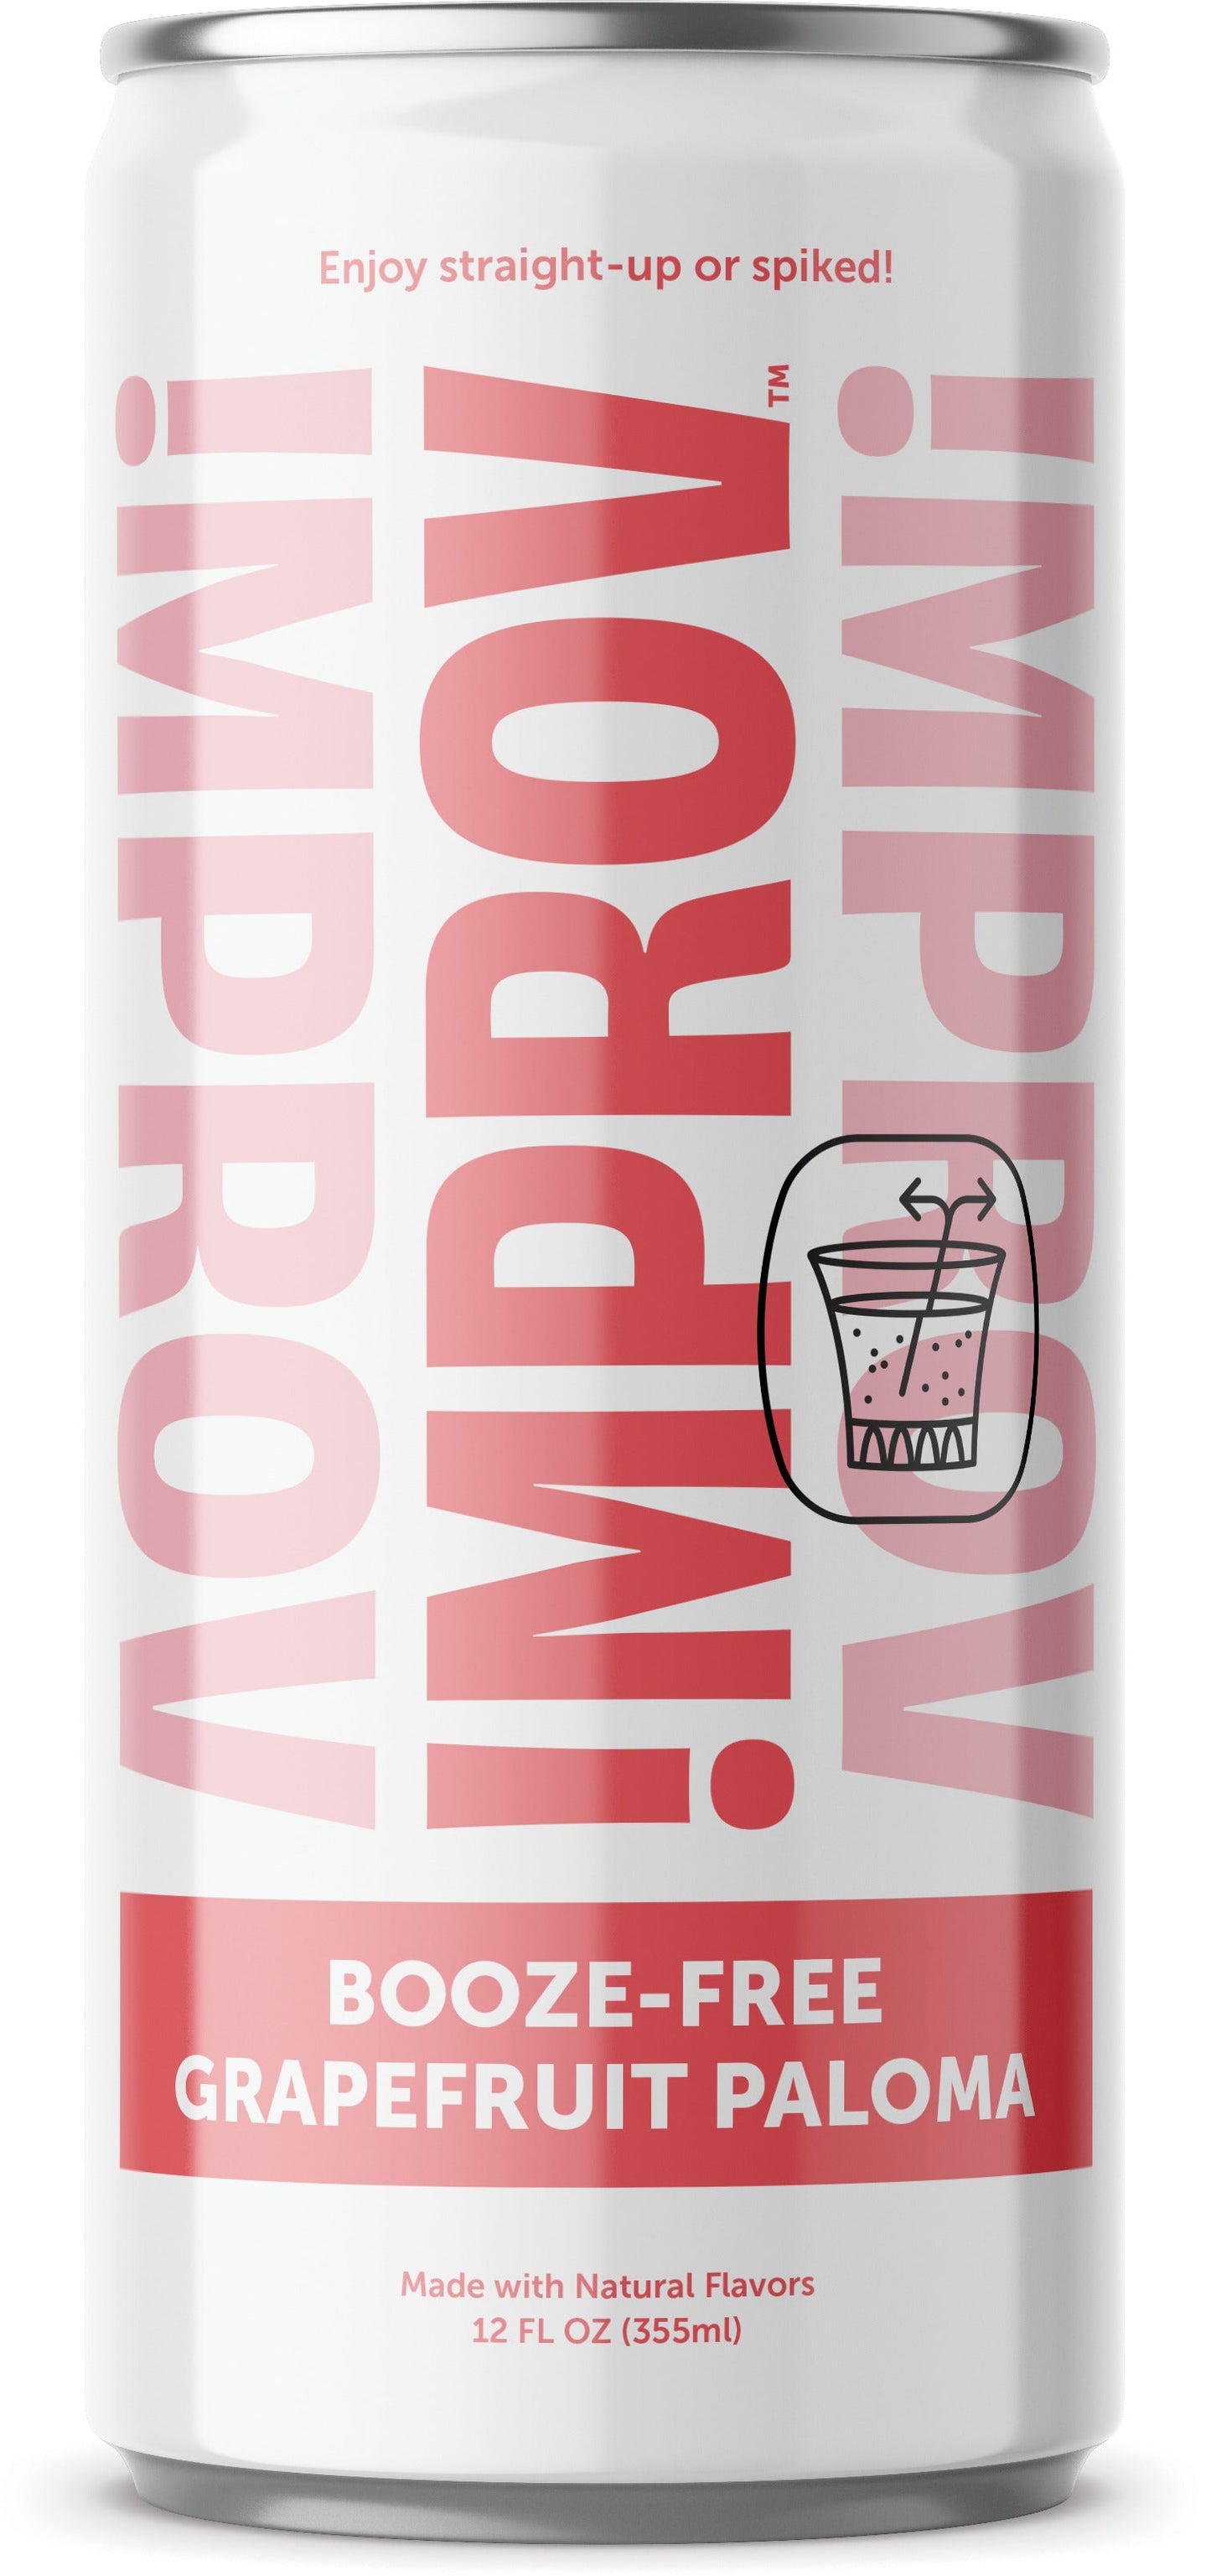 !MPROV Booze-Free Grapefruit Paloma, 4 pack